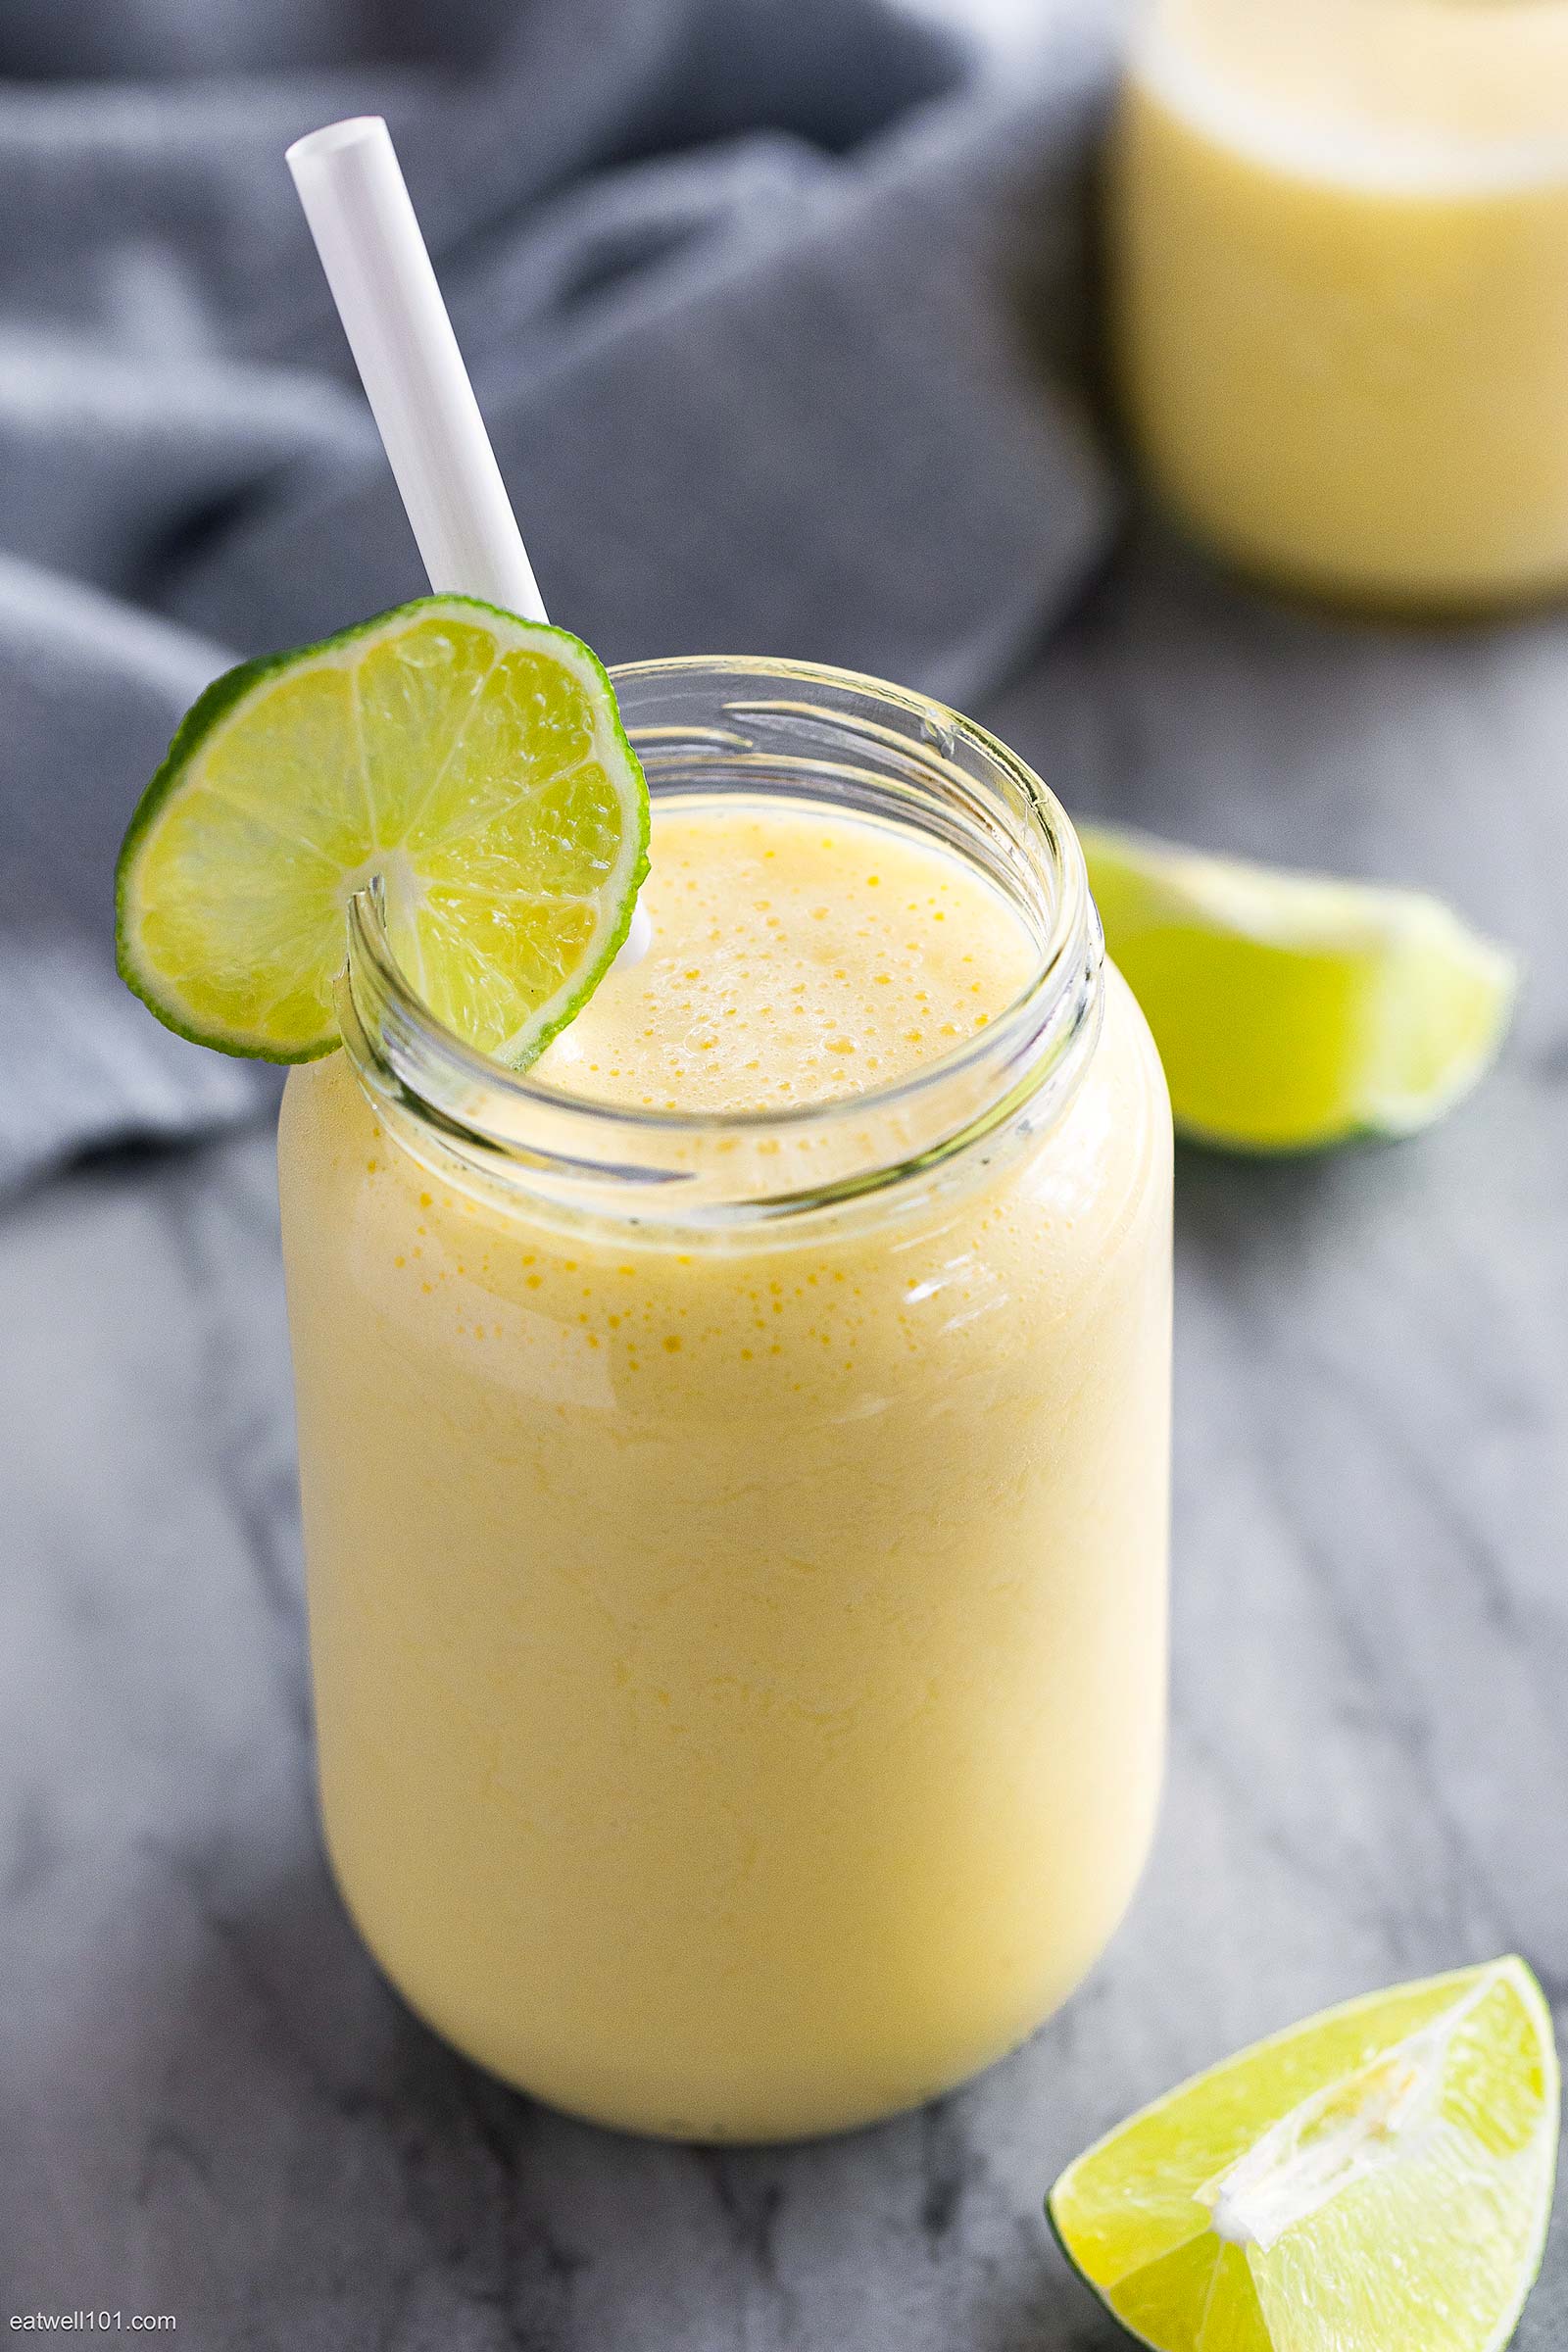 Mango Pineapple Coconut Milk Smoothie Recipe – Dairy-Free Smoothie